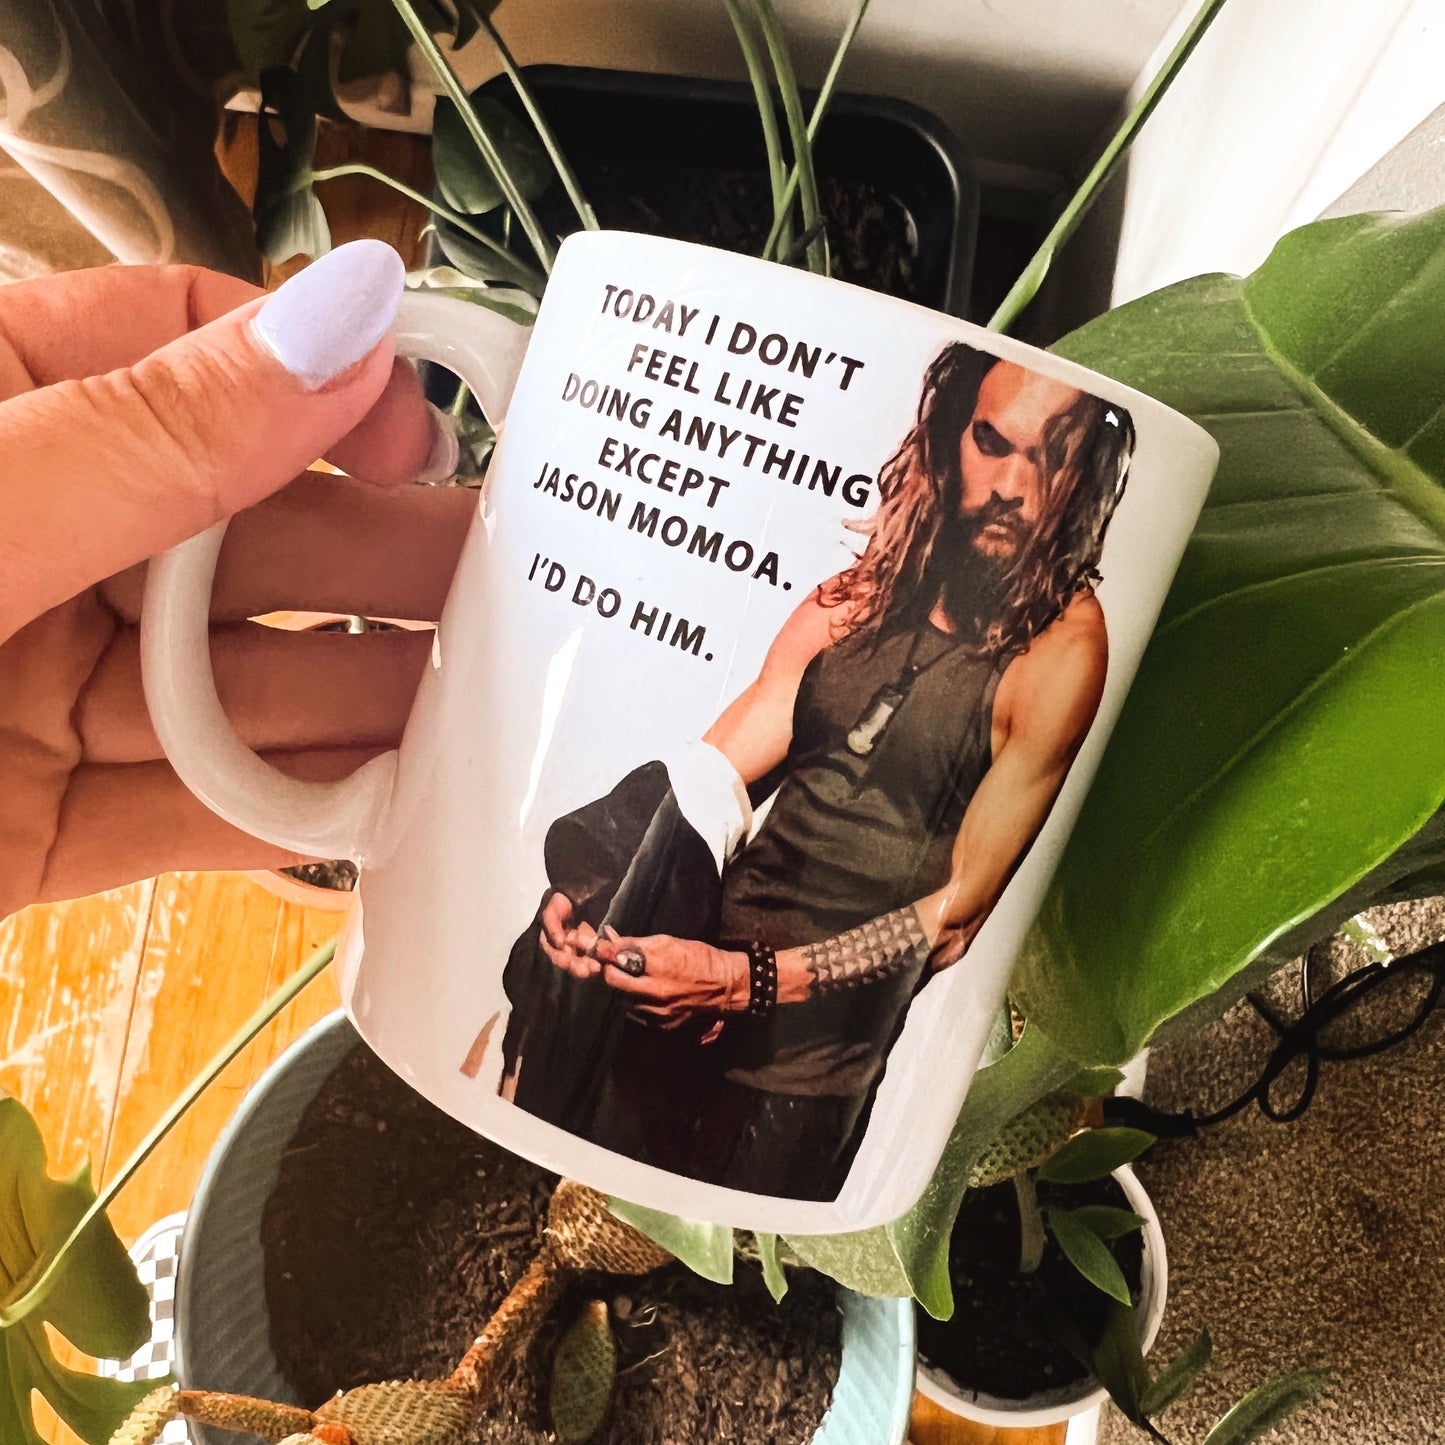 I'd do custom mug